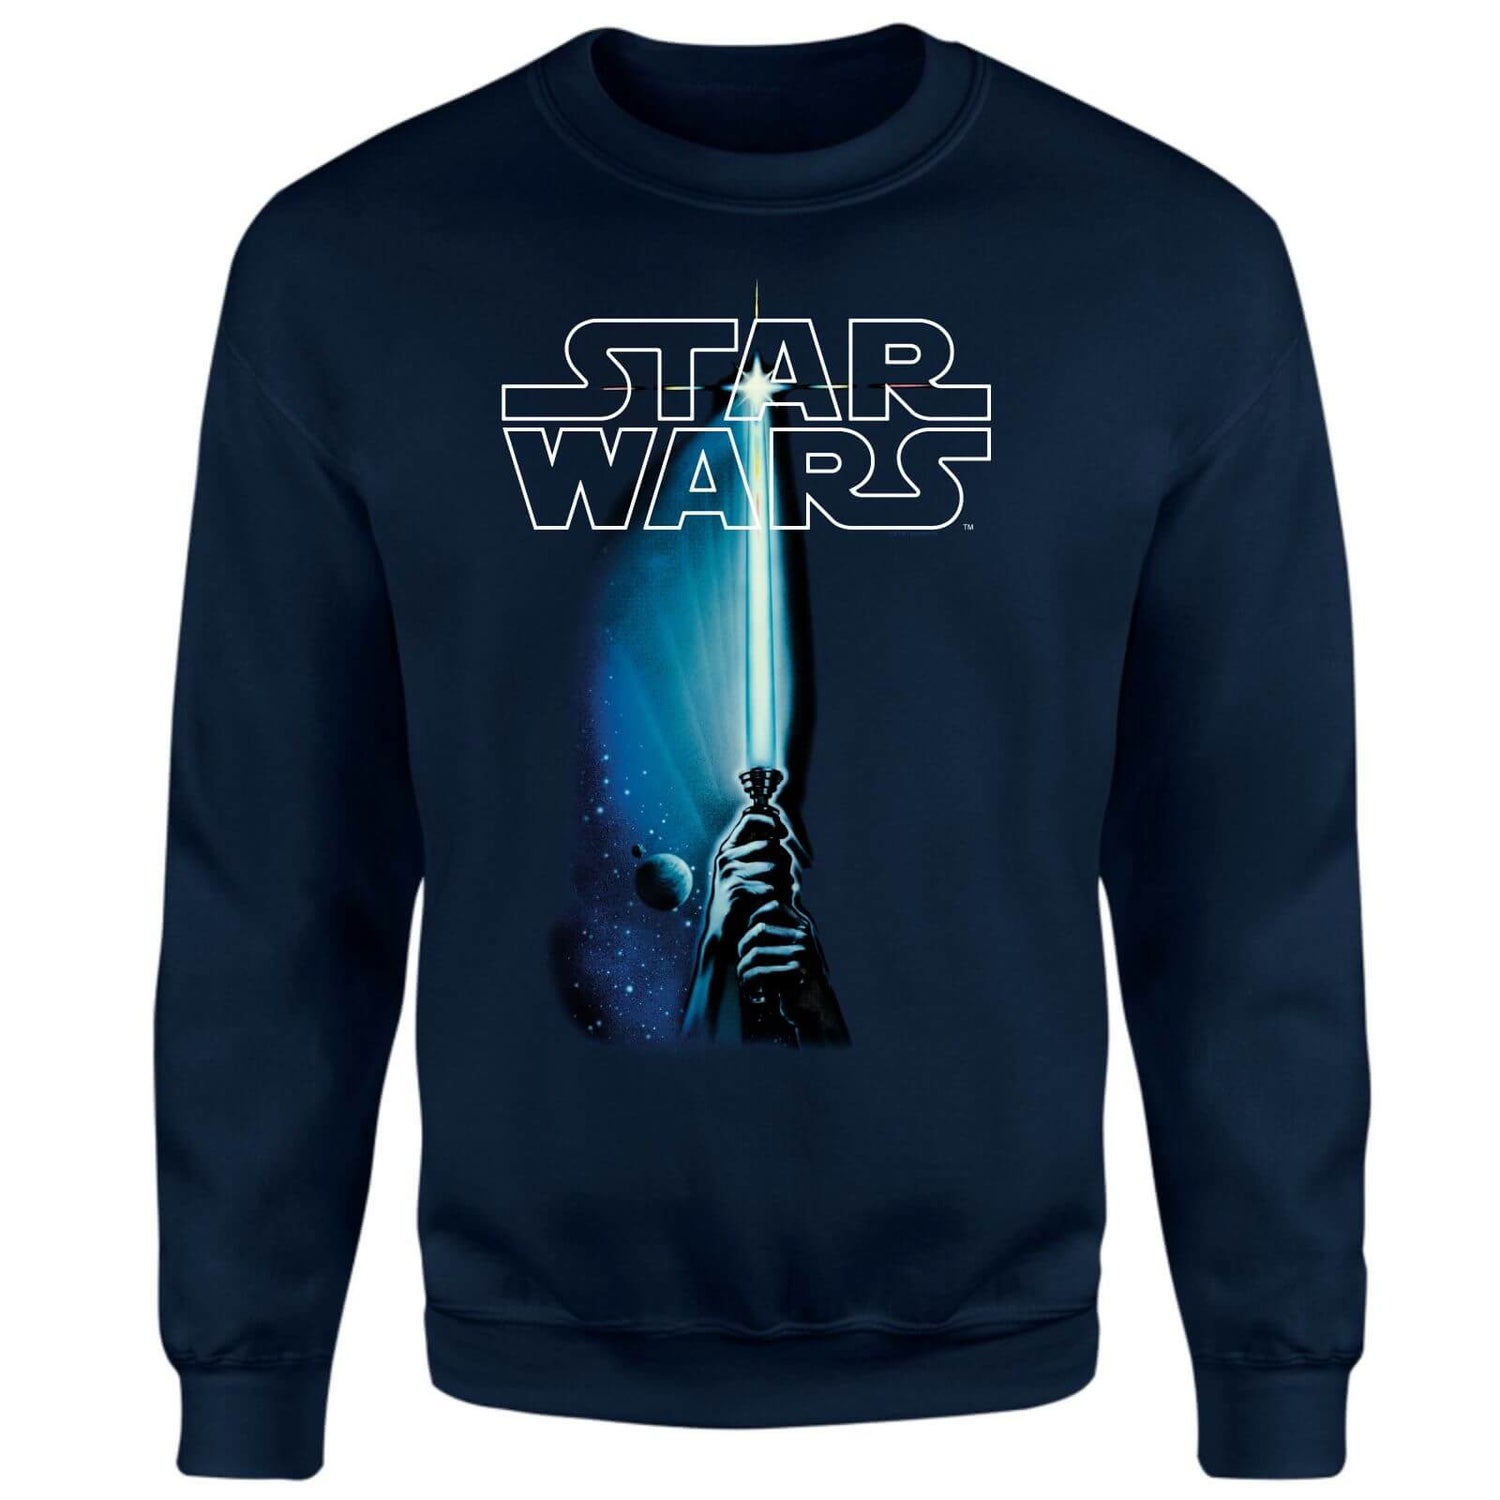 Star Wars Classic Lightsaber Sweatshirt - Navy